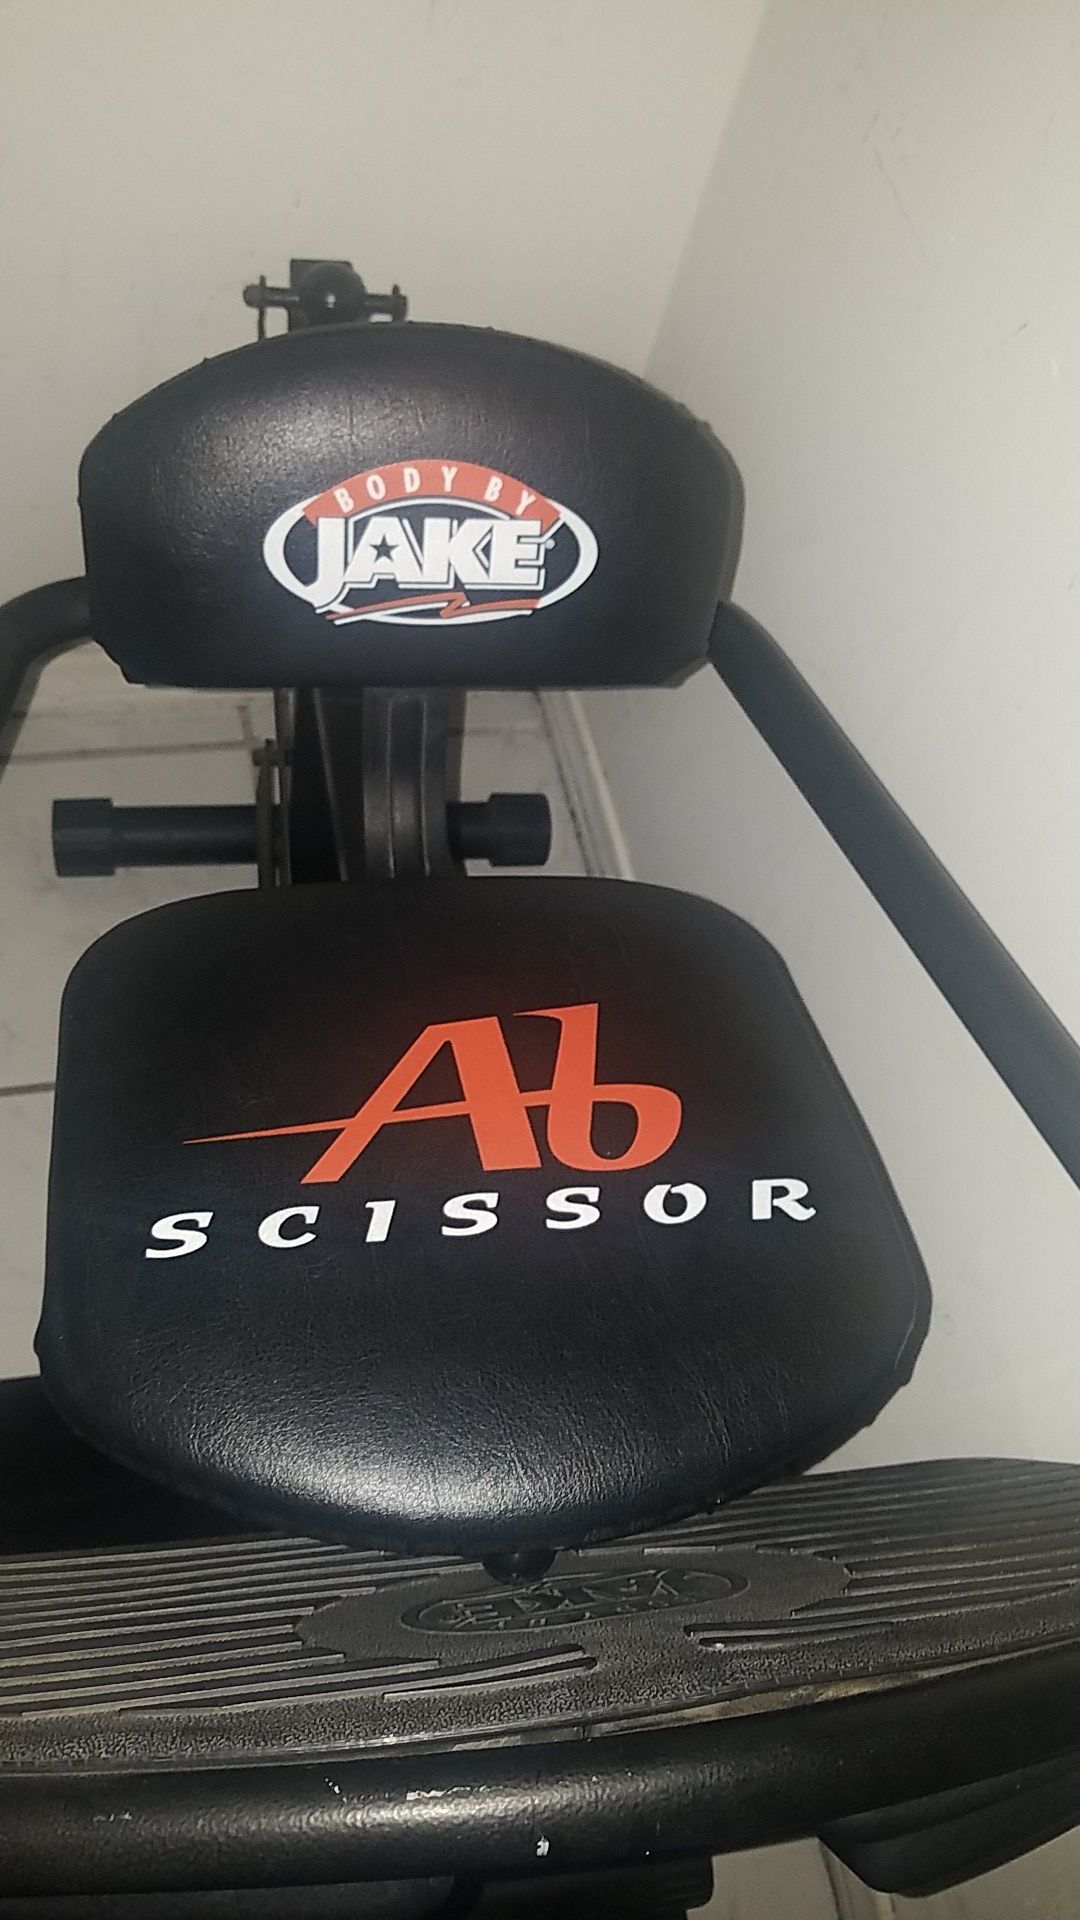 Ab Scissor workout machine